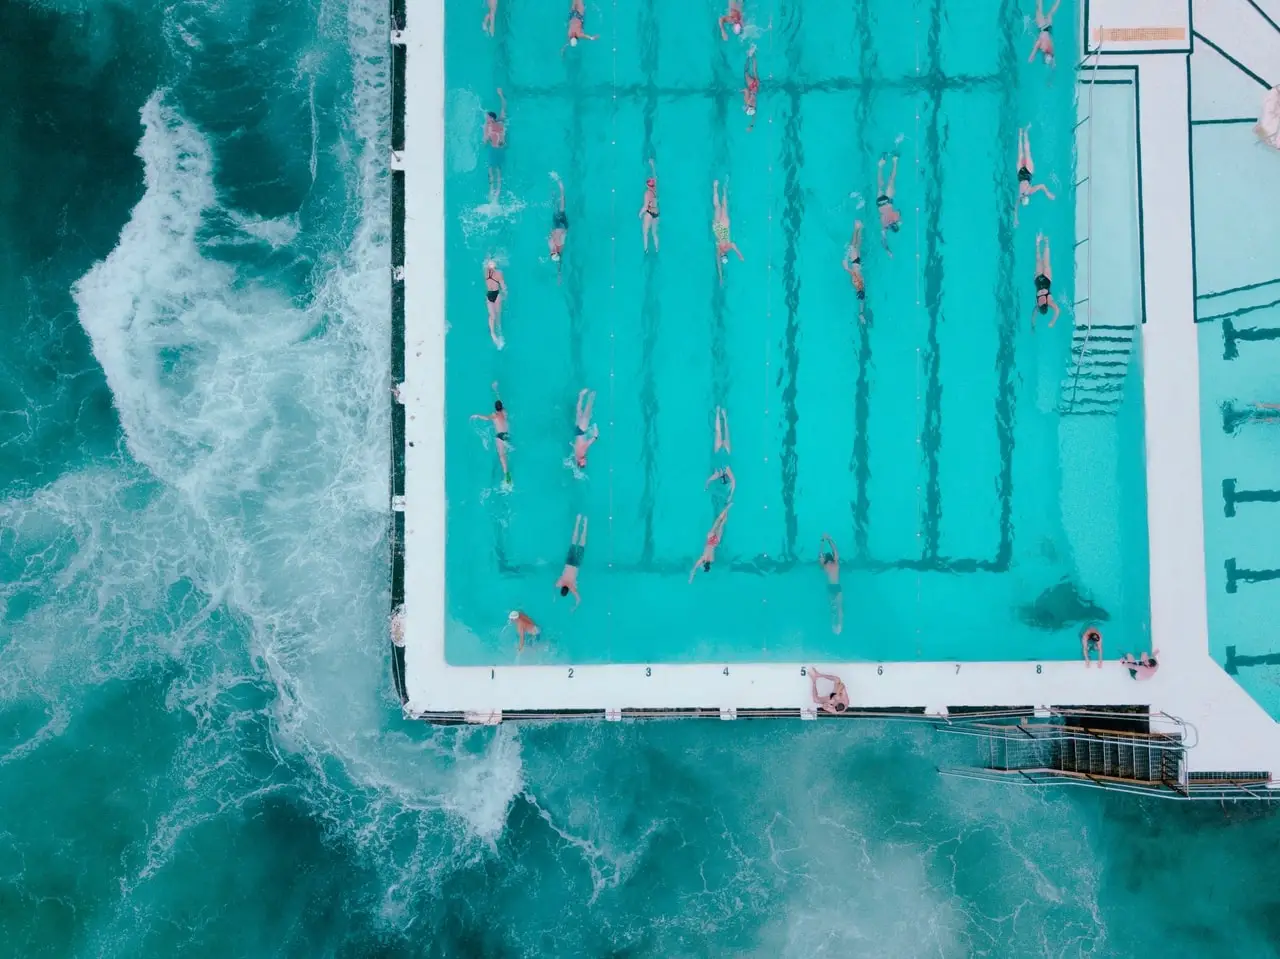 Bondi Icebergs swimming pool in Sydney Australia